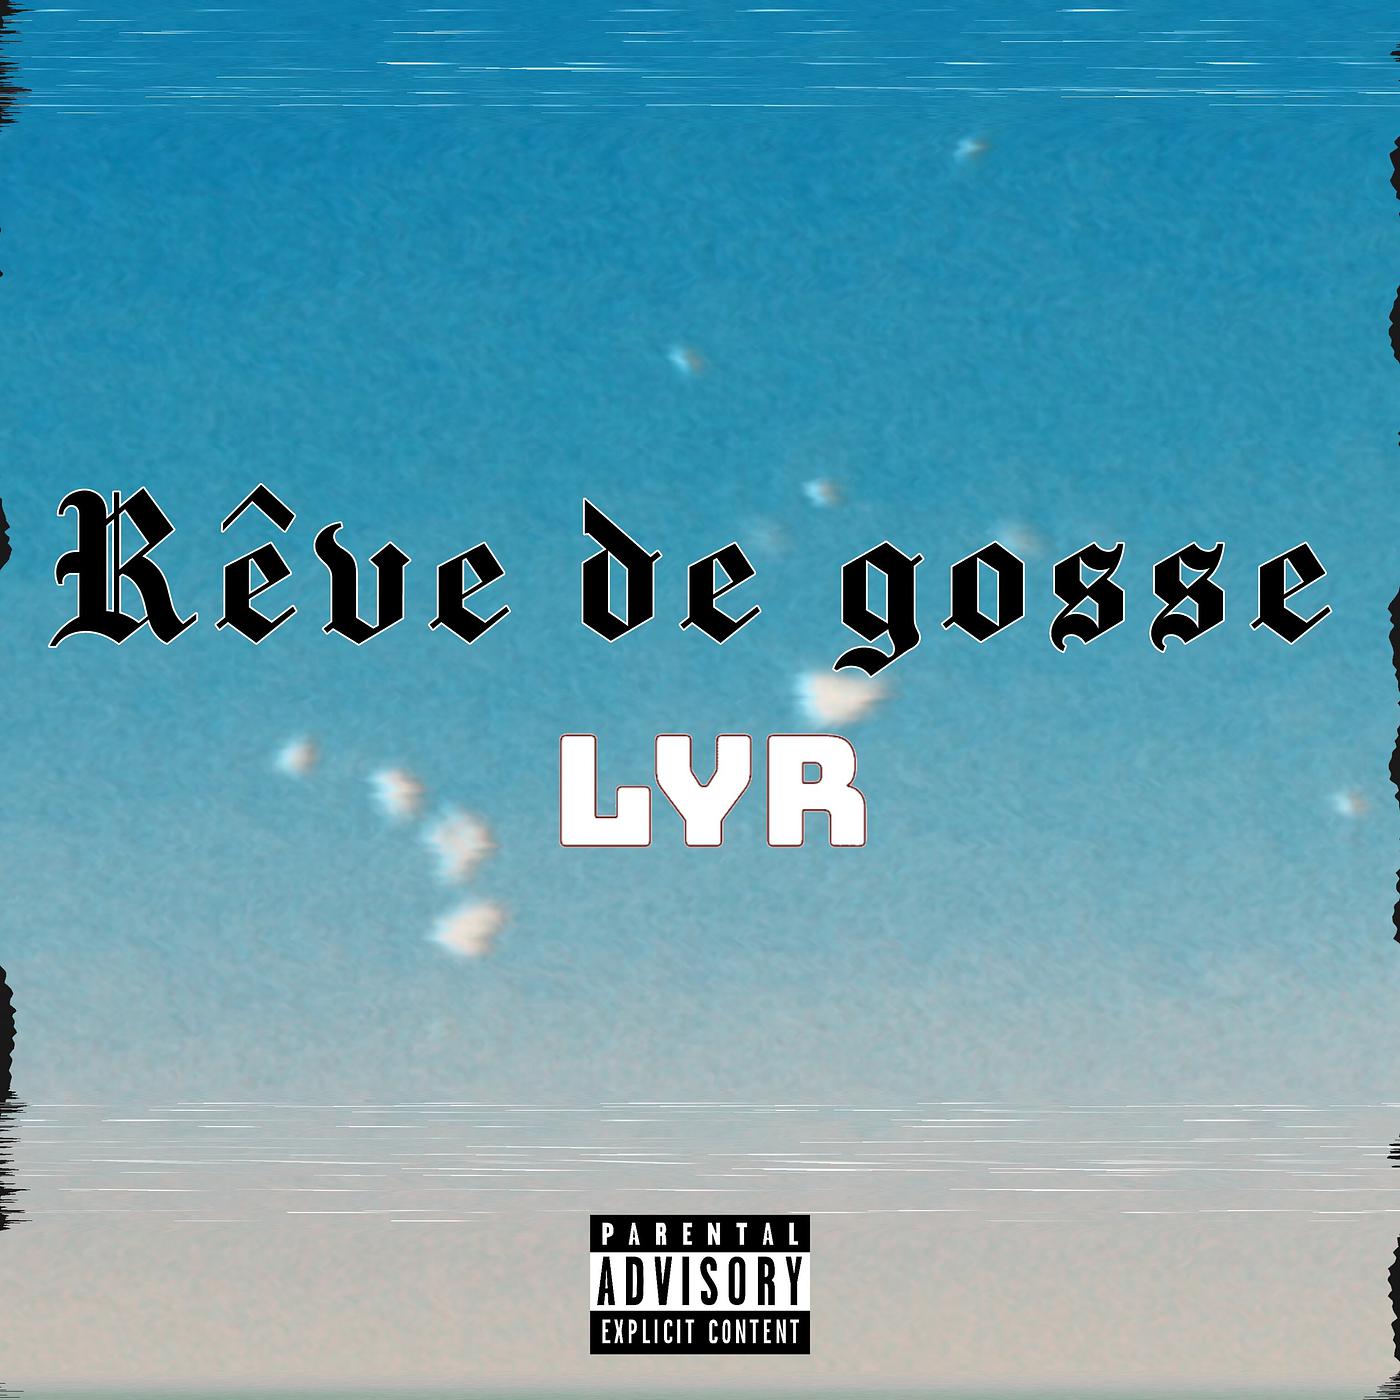 Постер альбома Rêve de gosse